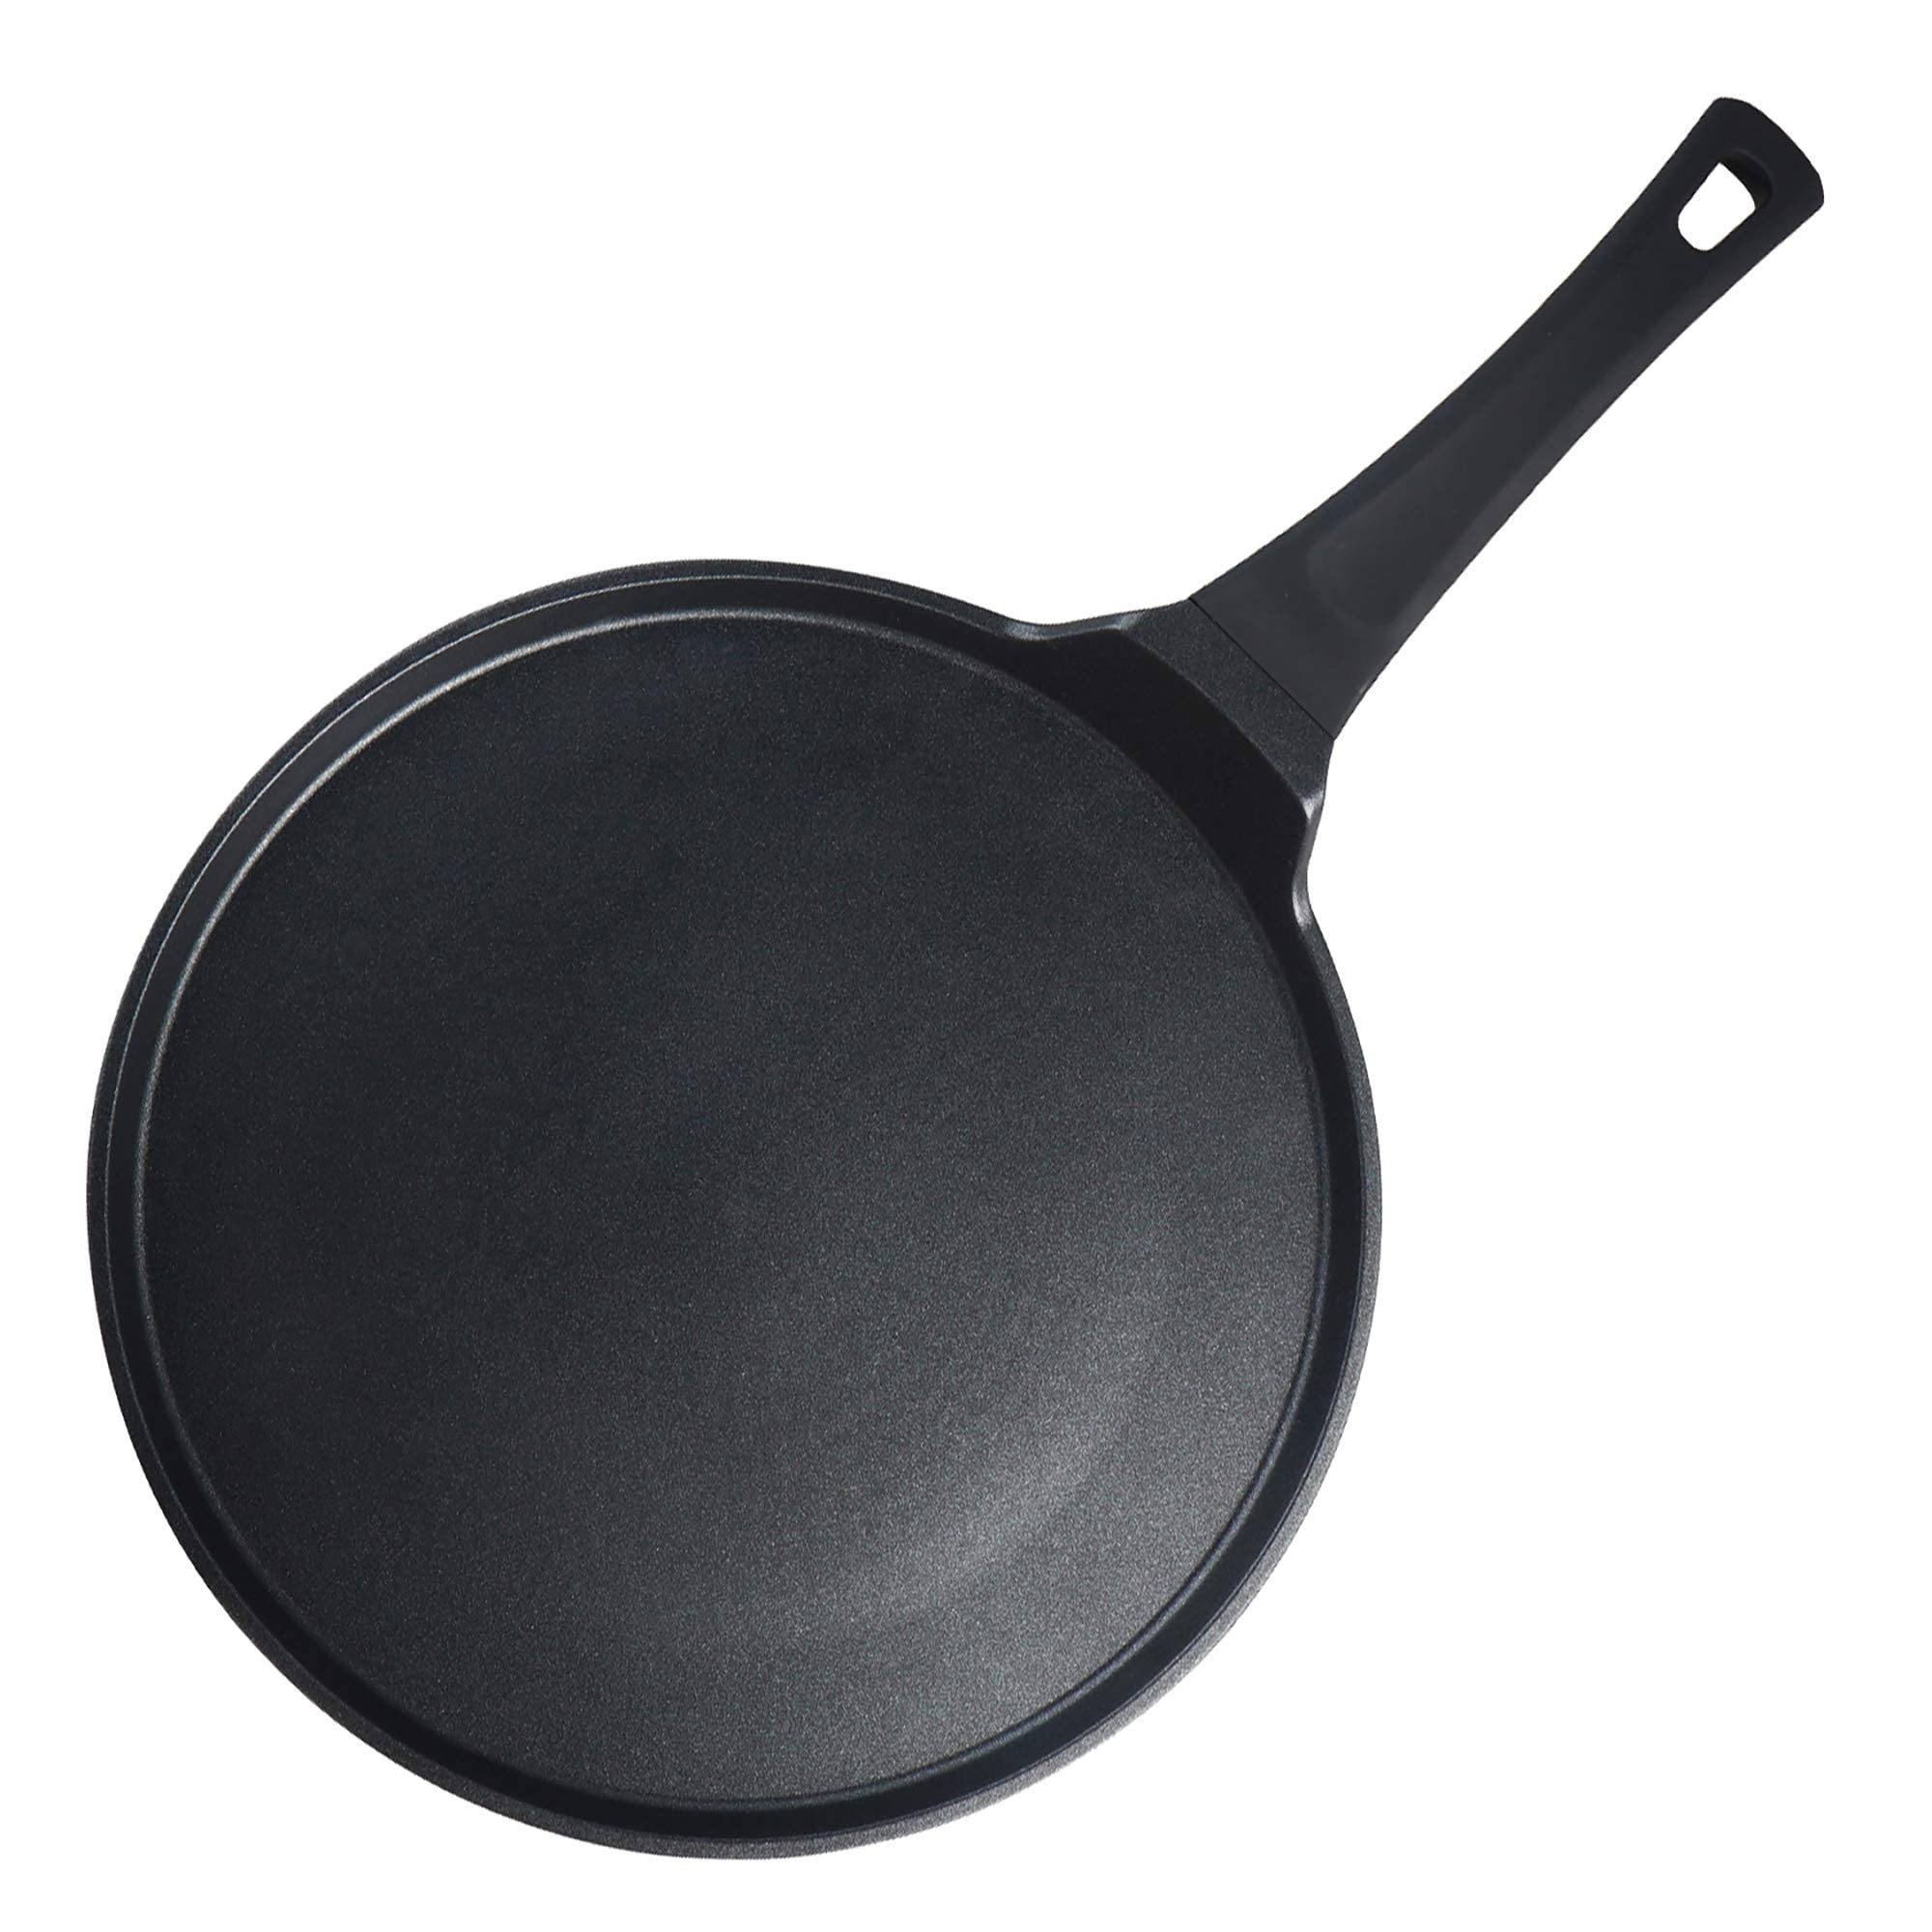 Innerwell Nonstick Crepe Pan, Granite Coating Flat Skillet Dosa Tawa  Tortilla Pan, 10 inch Pancake Griddle Roti Pan With Stay-Cool Handle,  Induction